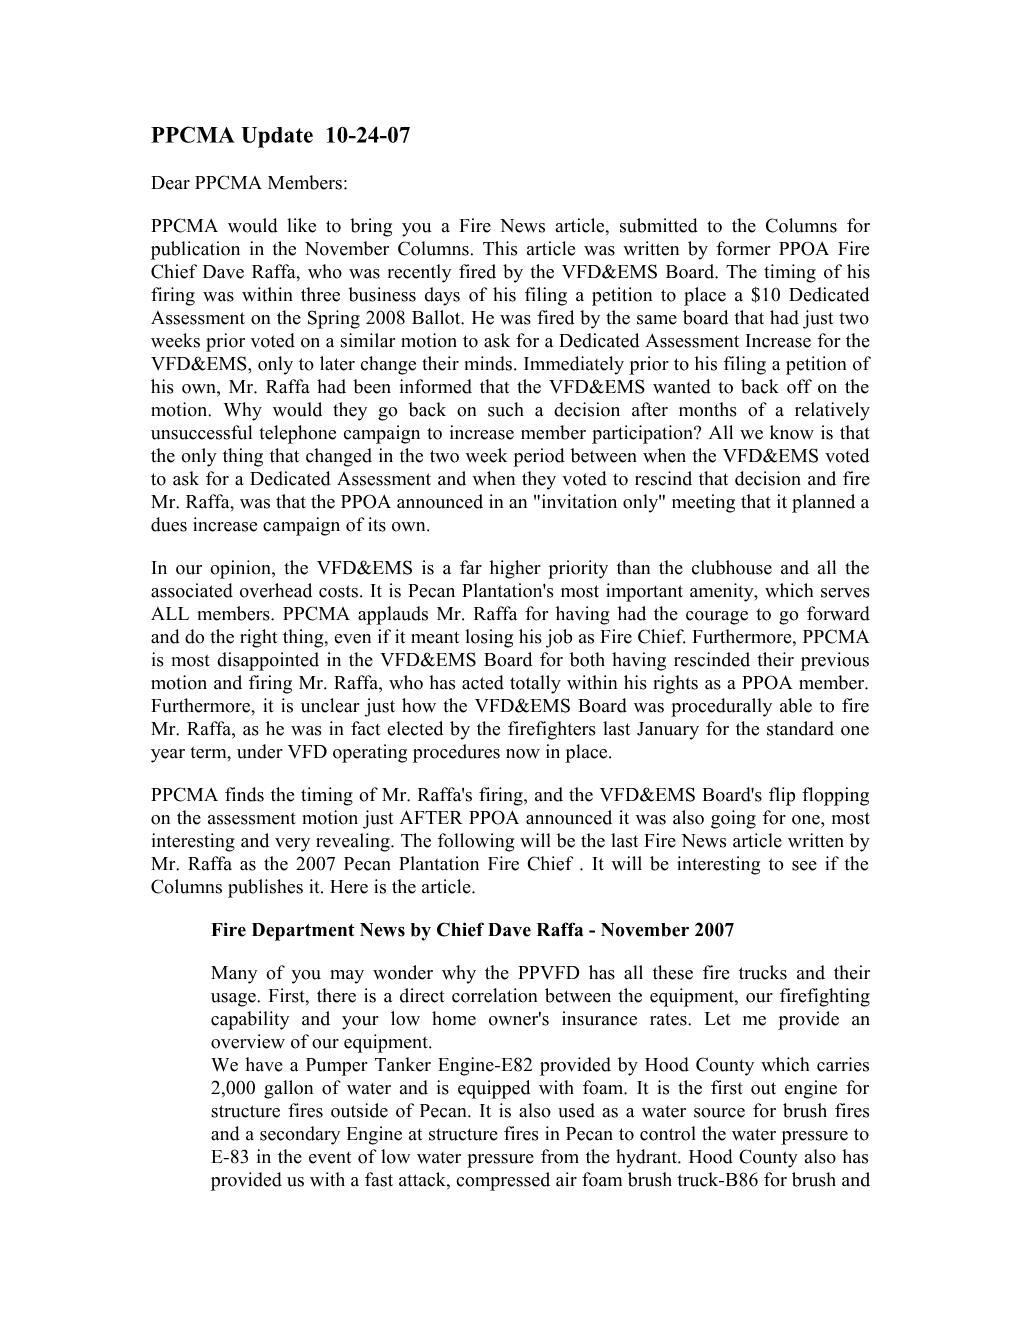 Fire Department News by Chief Dave Raffa - November 2007